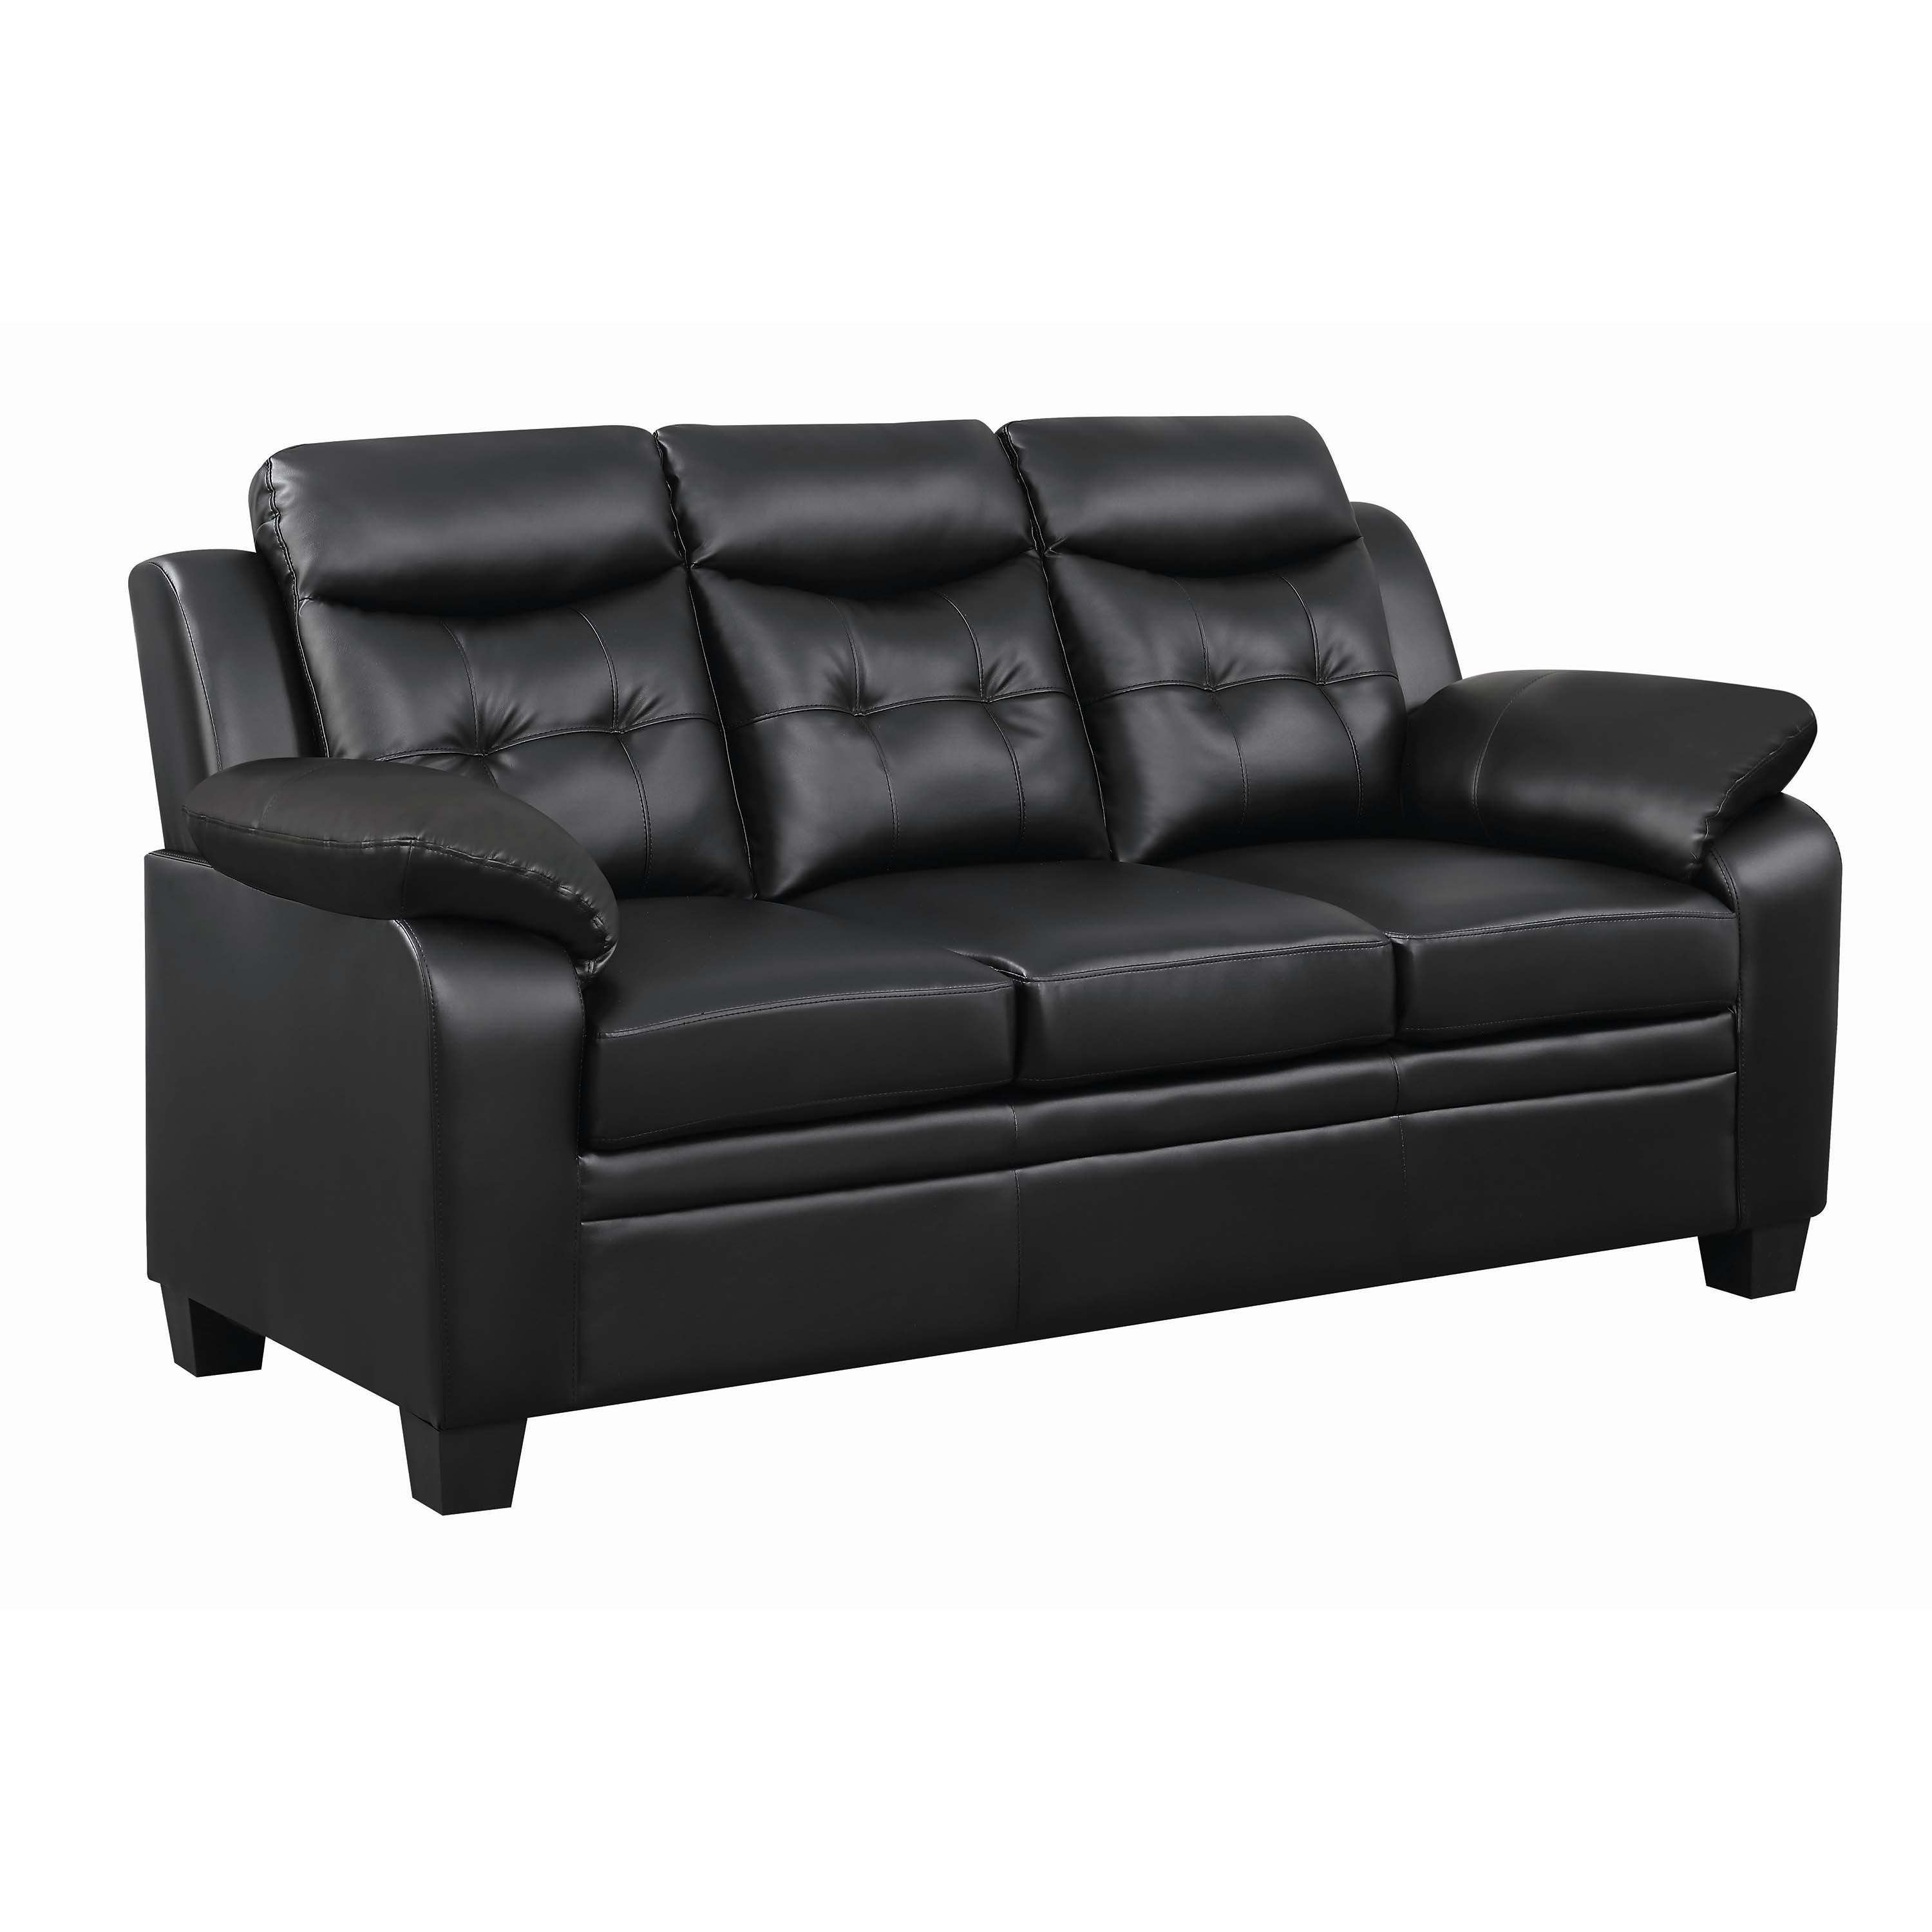 Finley Tufted Upholstered Sofa Black - image 1 of 3